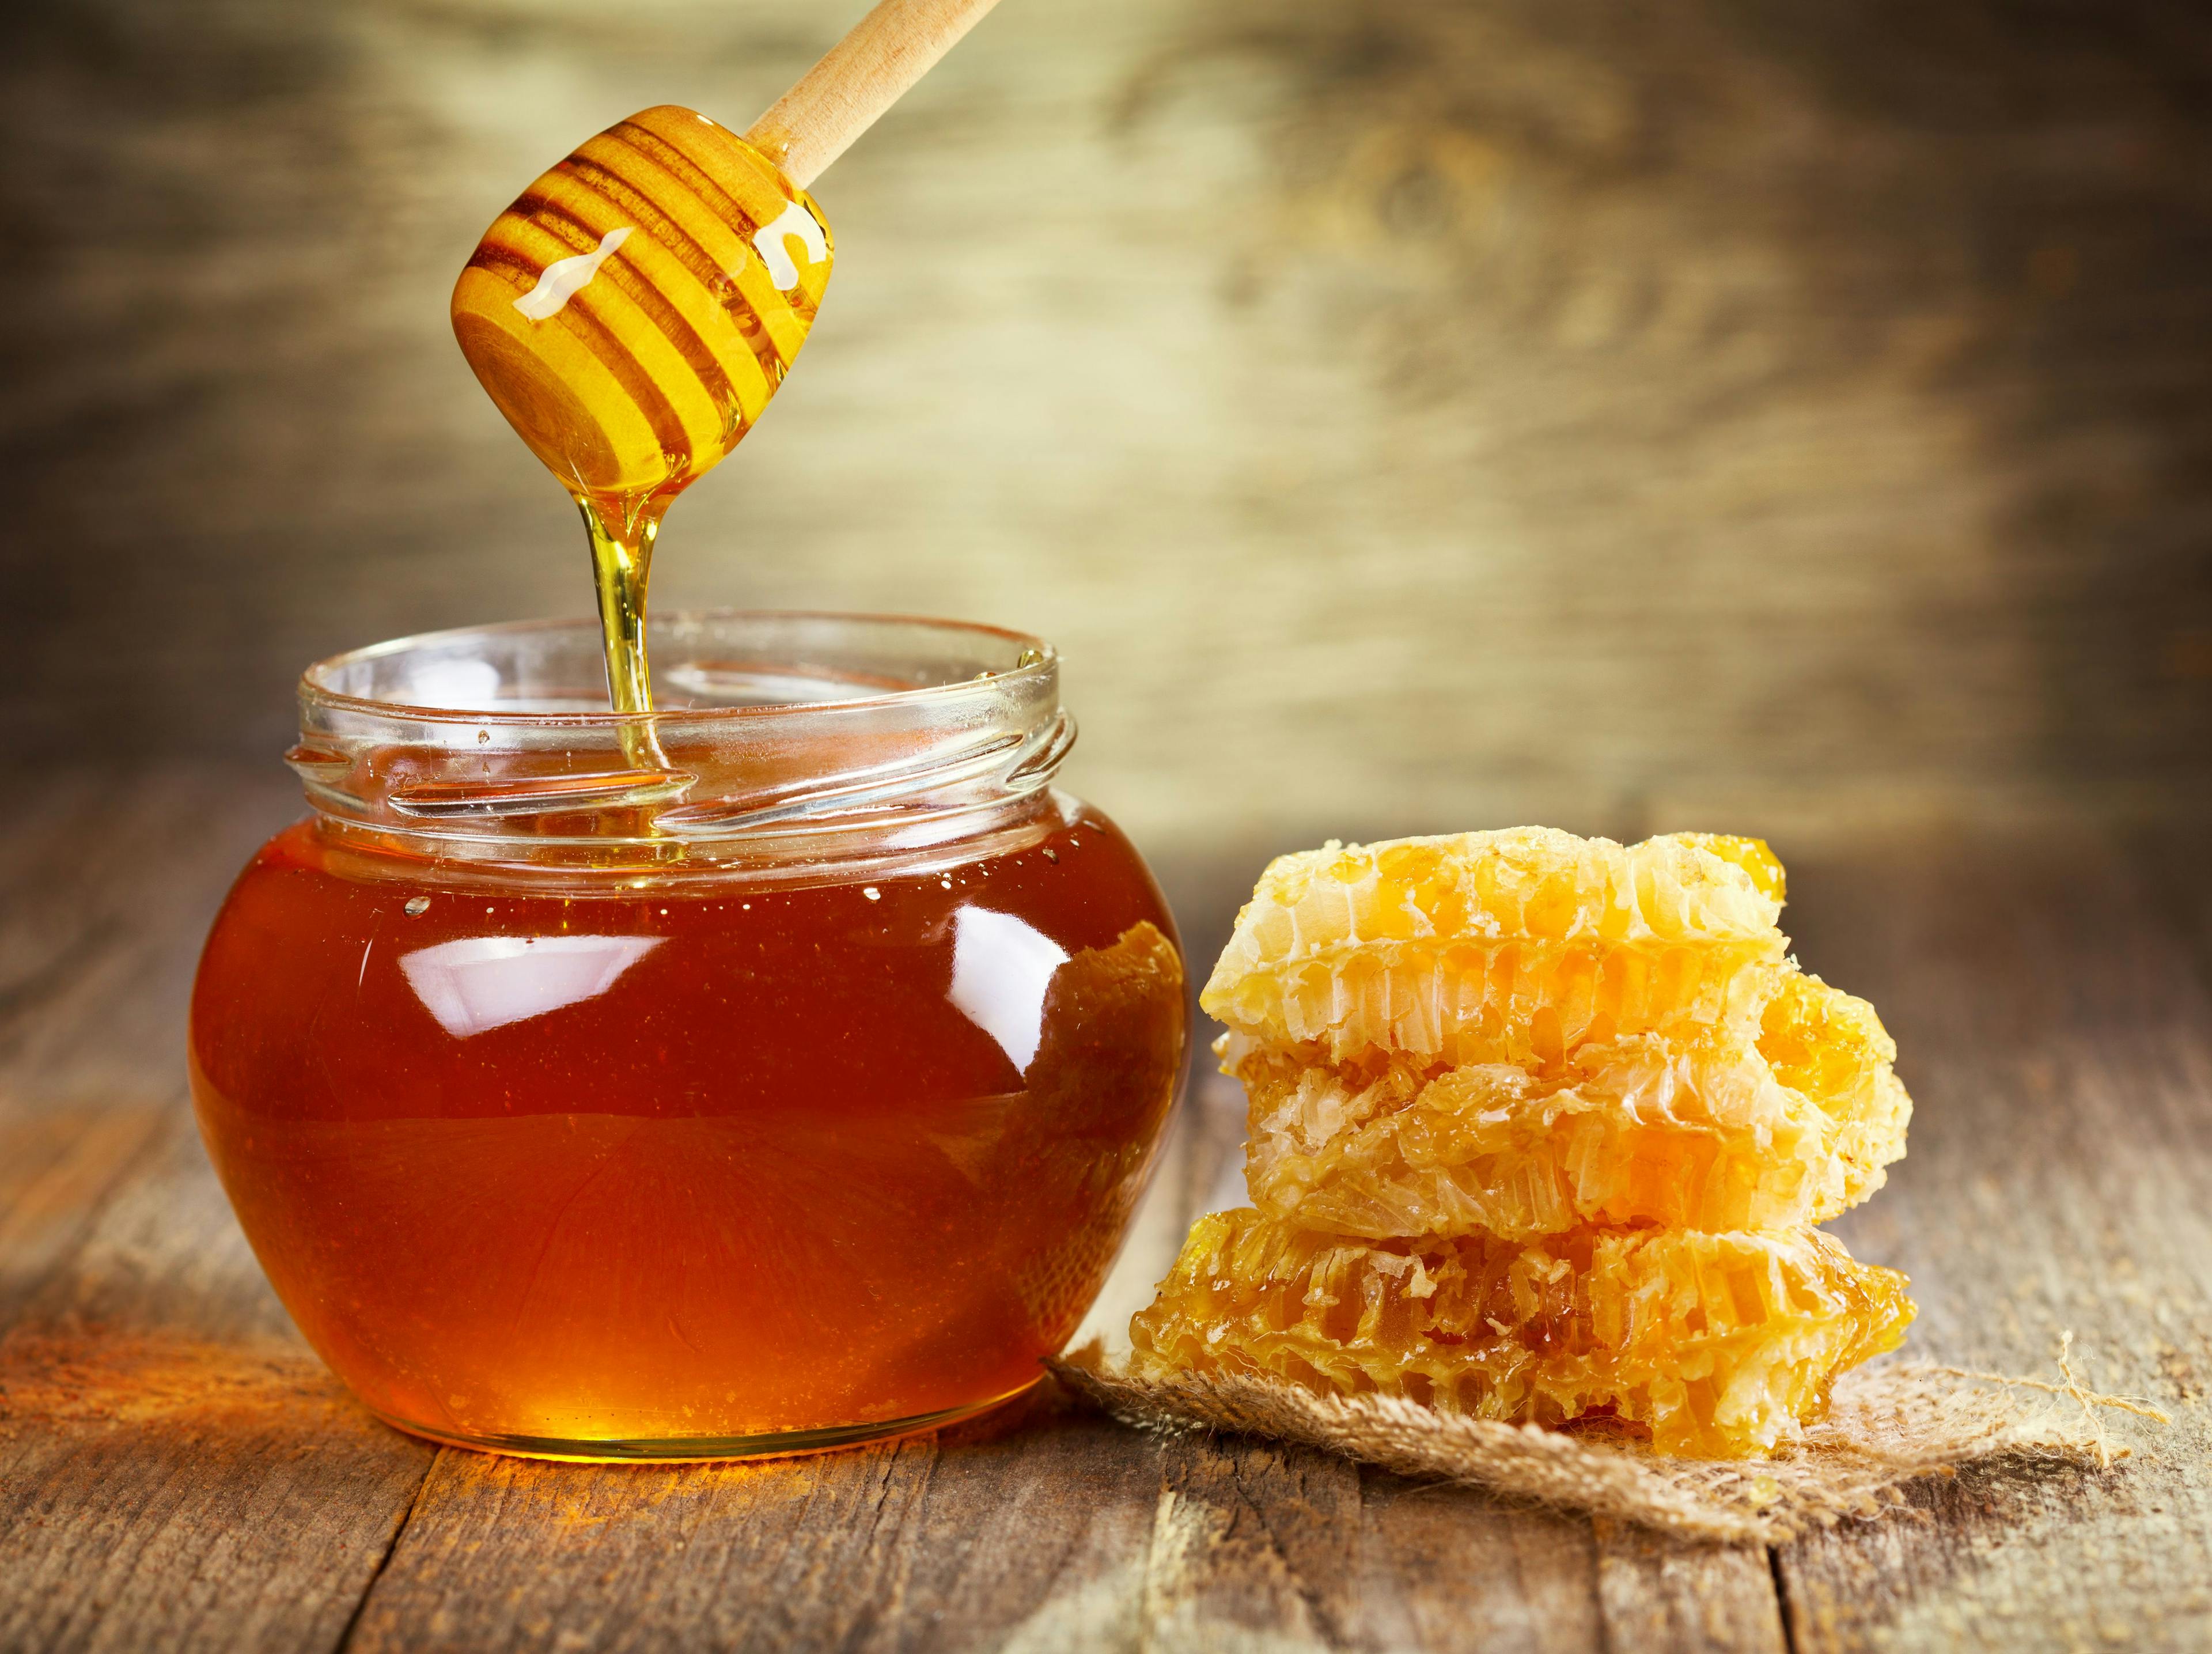 jar of honey with honeycomb | Image Credit: © Nitr - stock.adobe.com